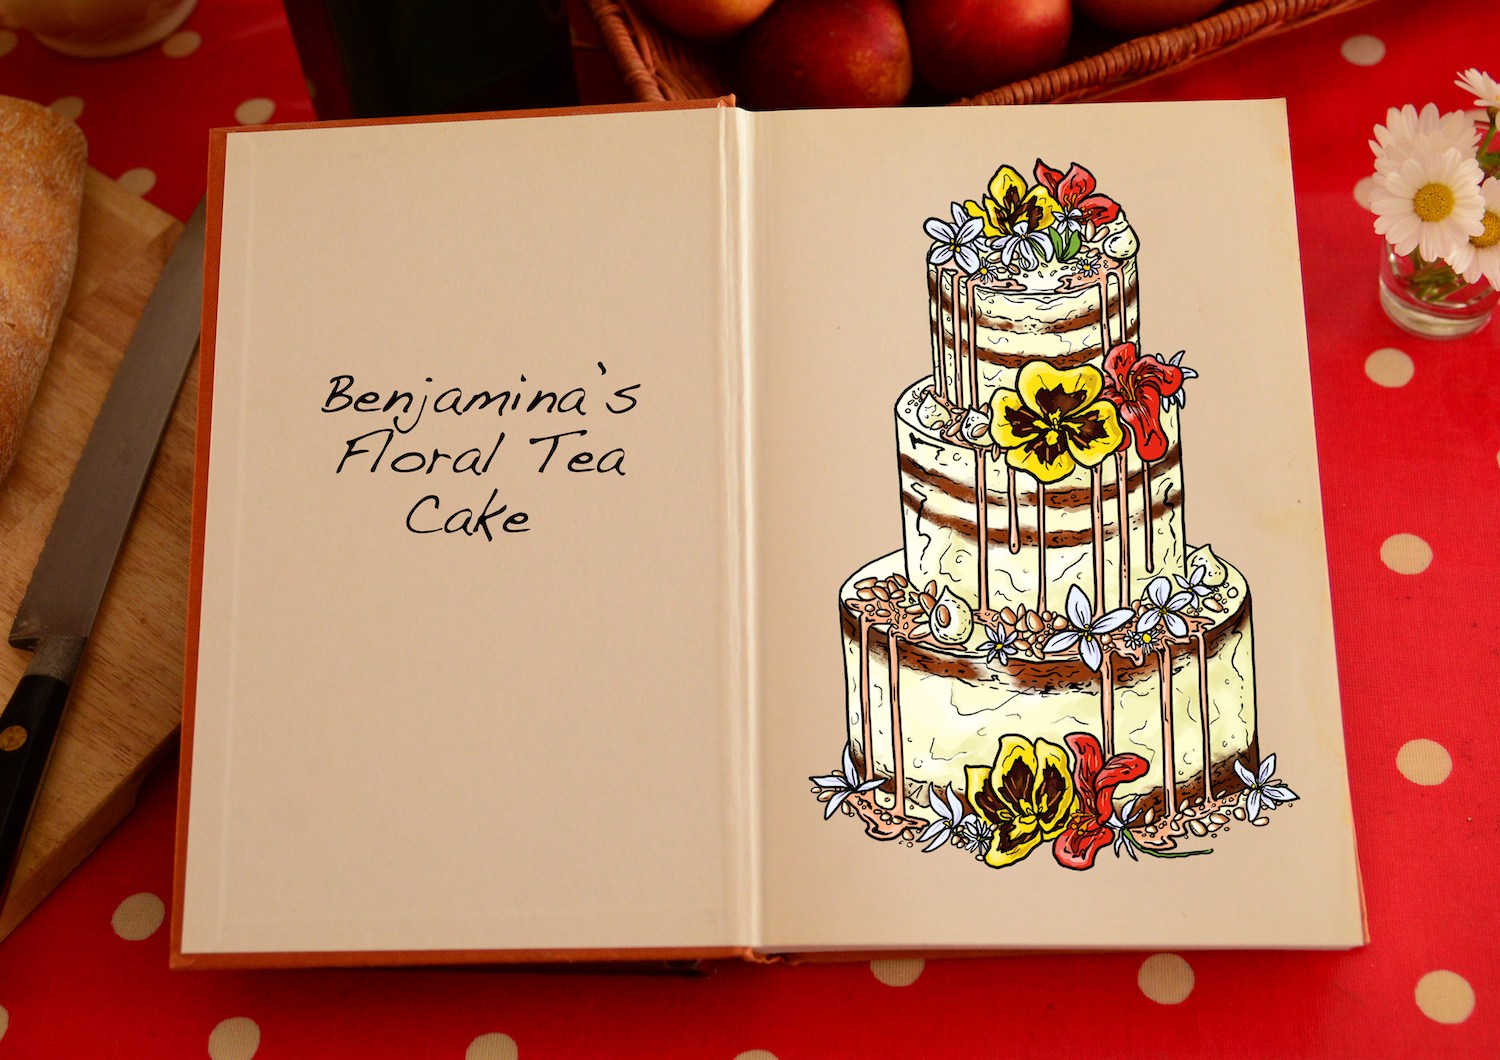 Tom Hovey, Benjamina's Floral Tea Cake, Great British Bake Off Series 7